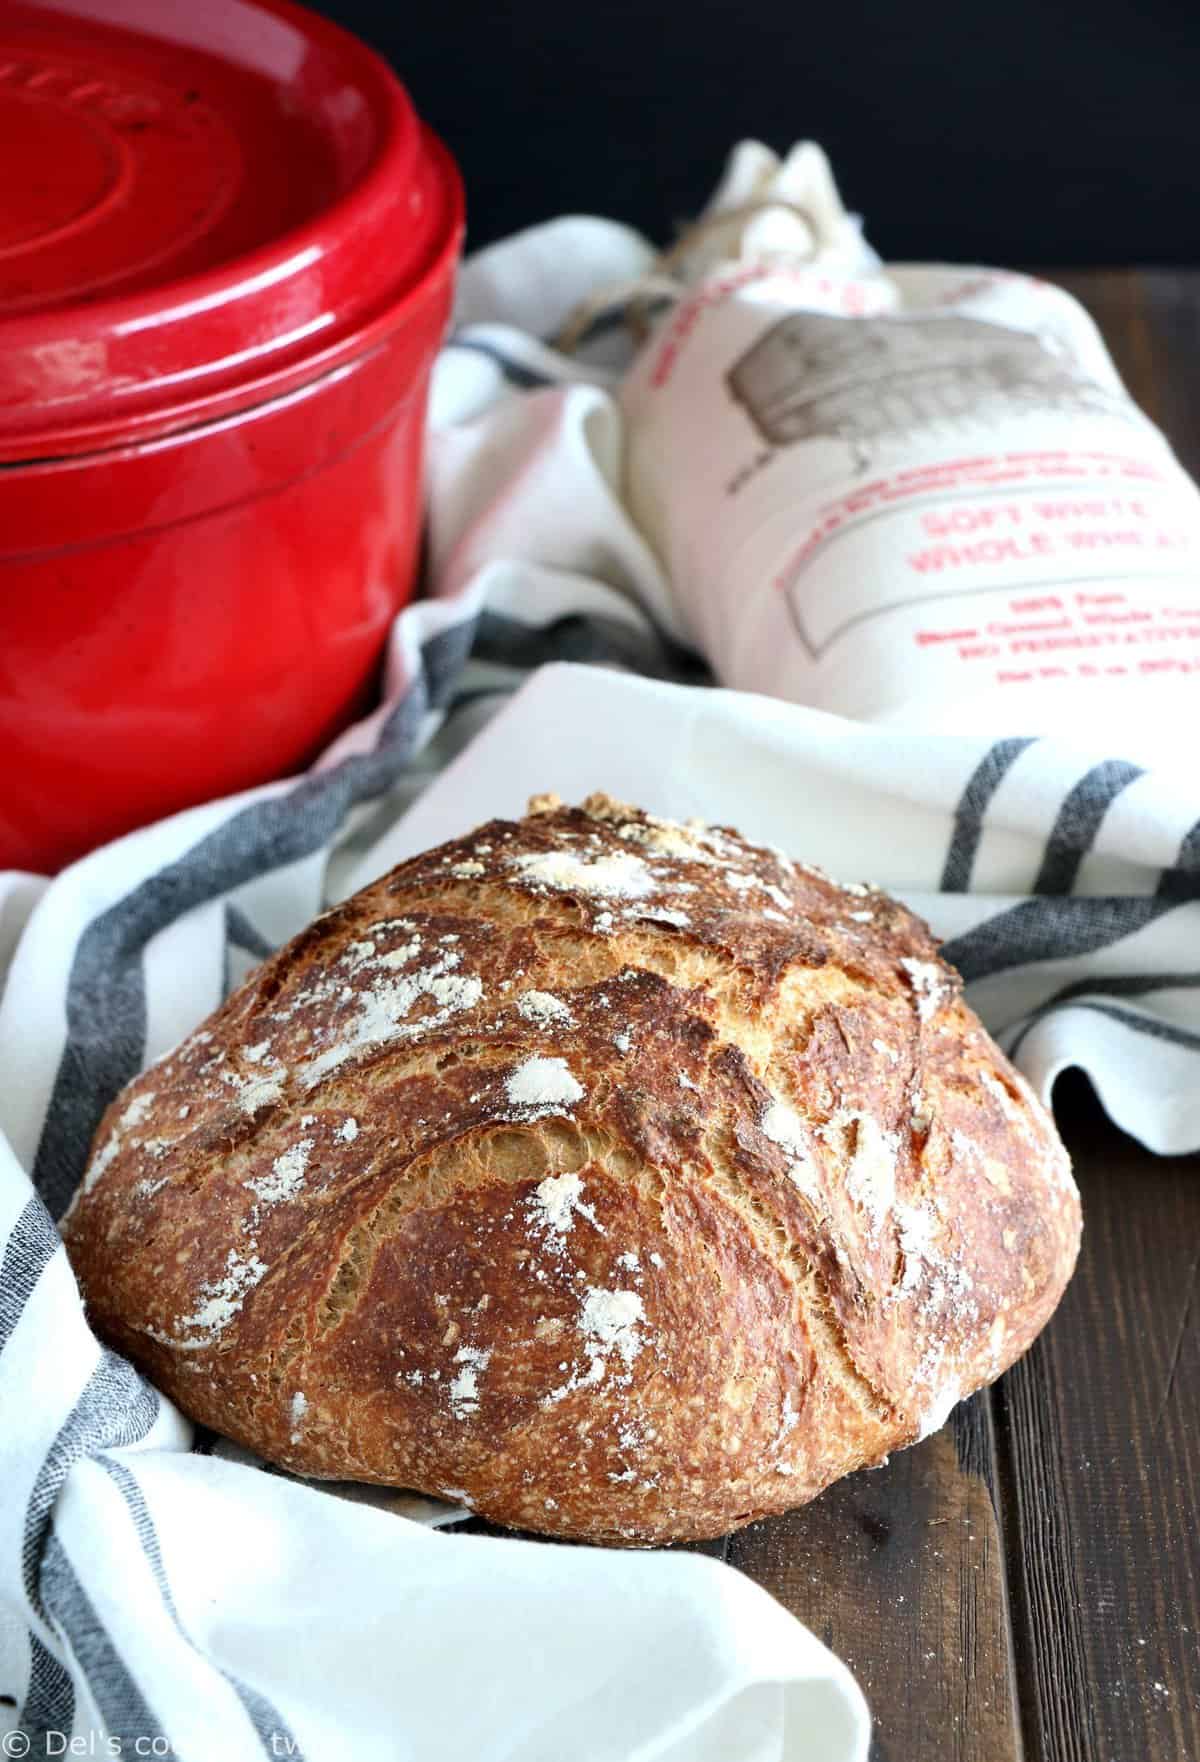 https://www.delscookingtwist.com/wp-content/uploads/2018/03/Whole-Wheat-No-Knead-Bread_0274.jpg